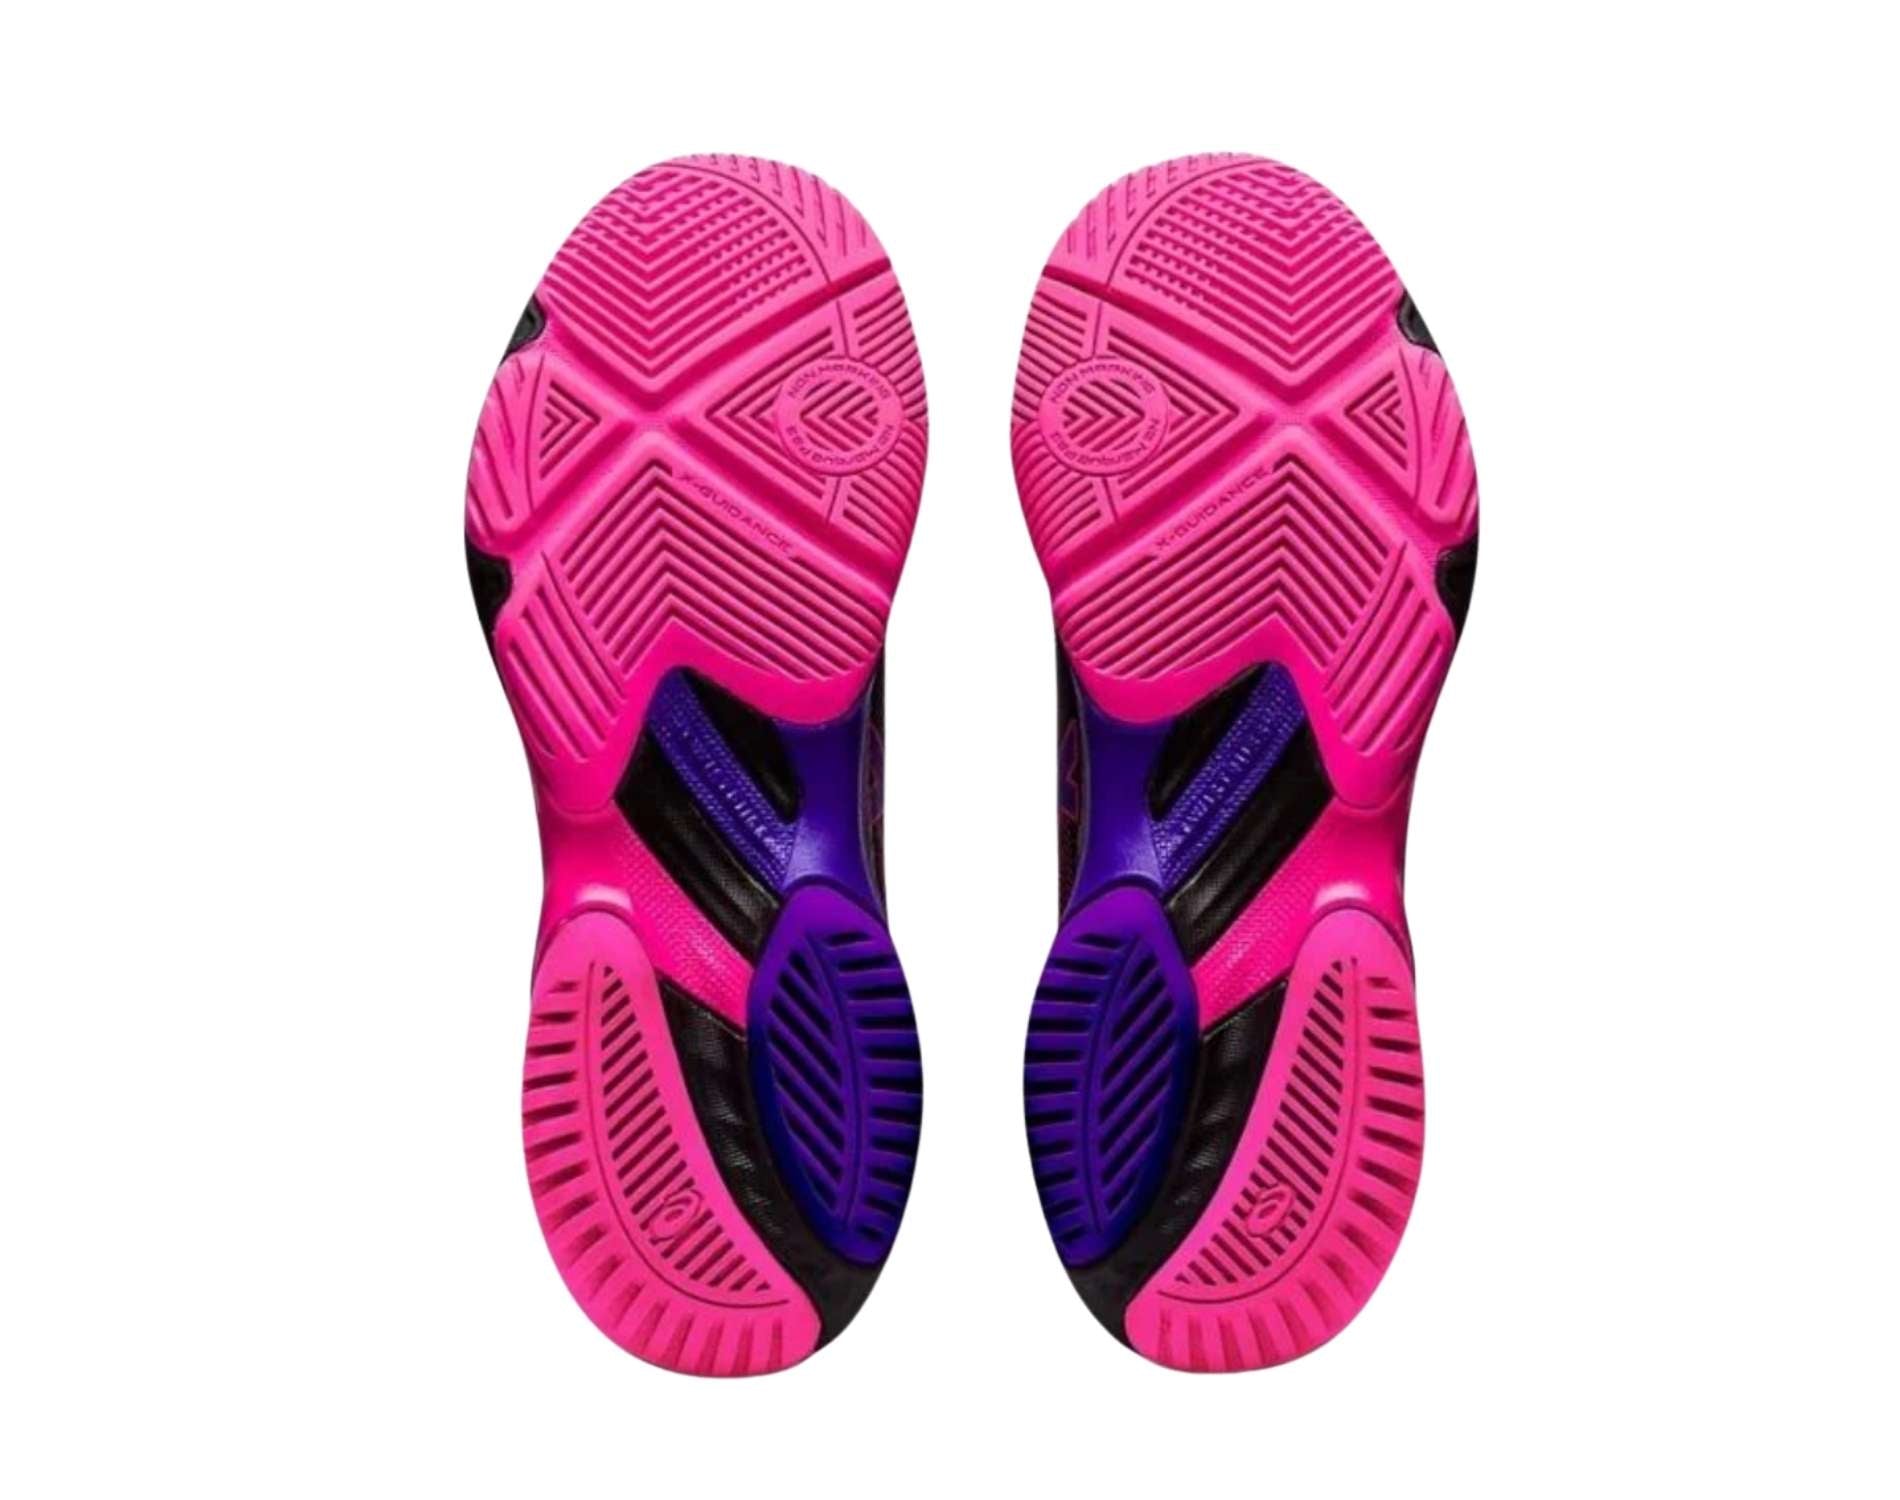 Asics netburner Ballistic FF MT 3 womens netball shoe in b standard width in black pink glo colour